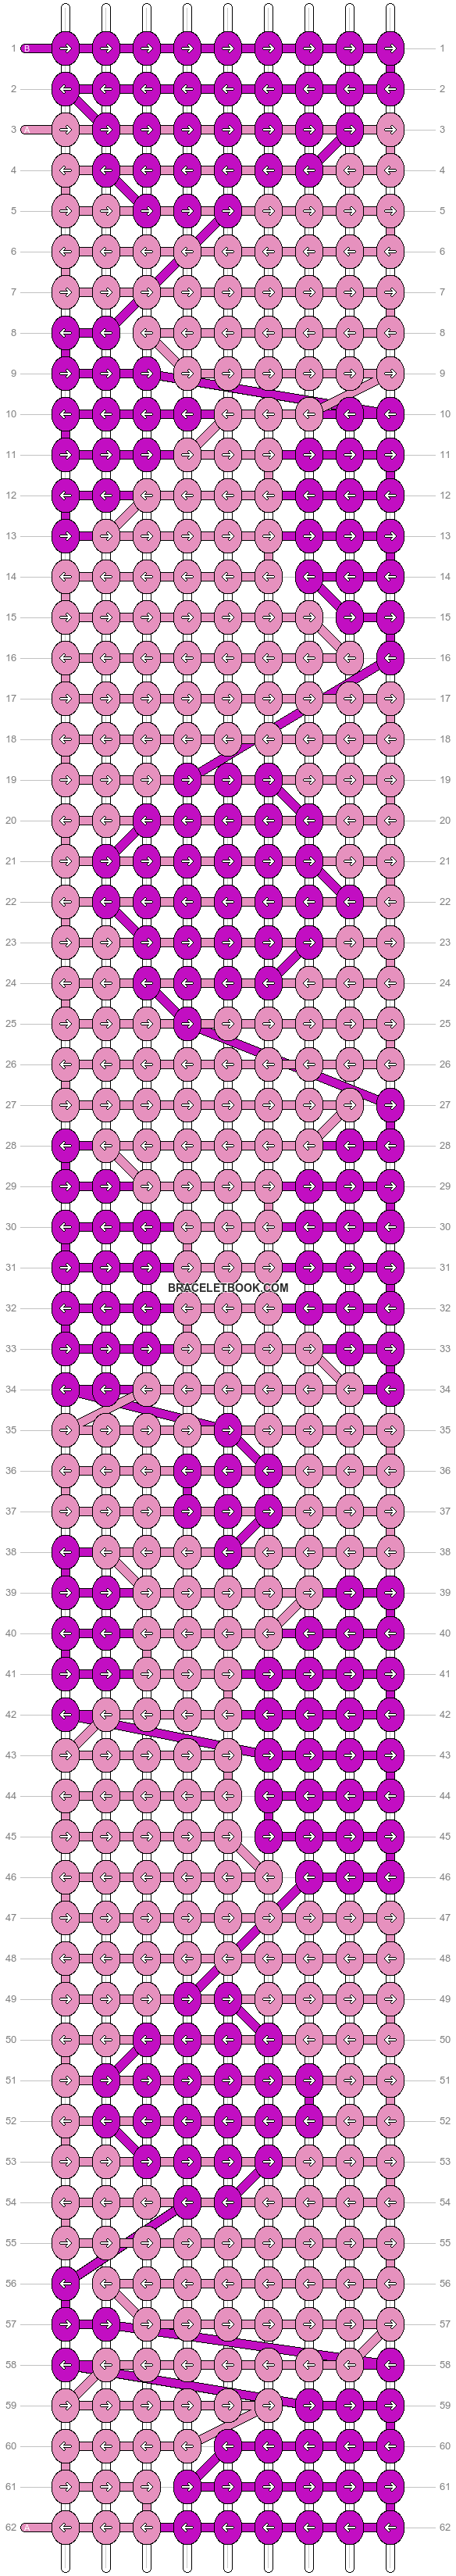 Alpha pattern #45106 variation #156172 pattern